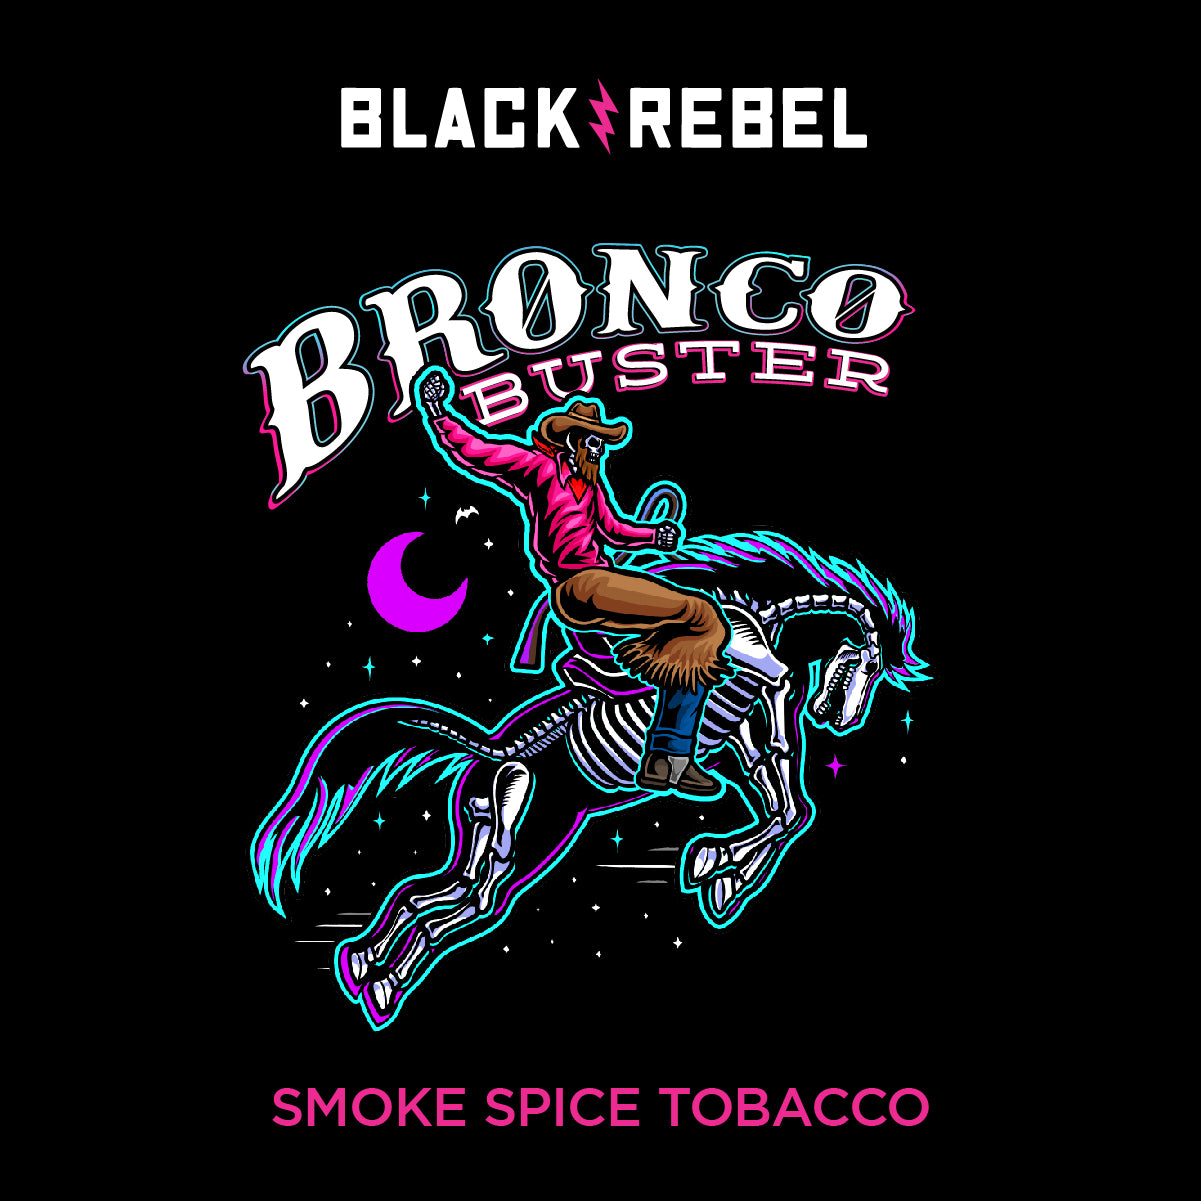 THE BRONCO BUSTER (smoke spice tobacco)